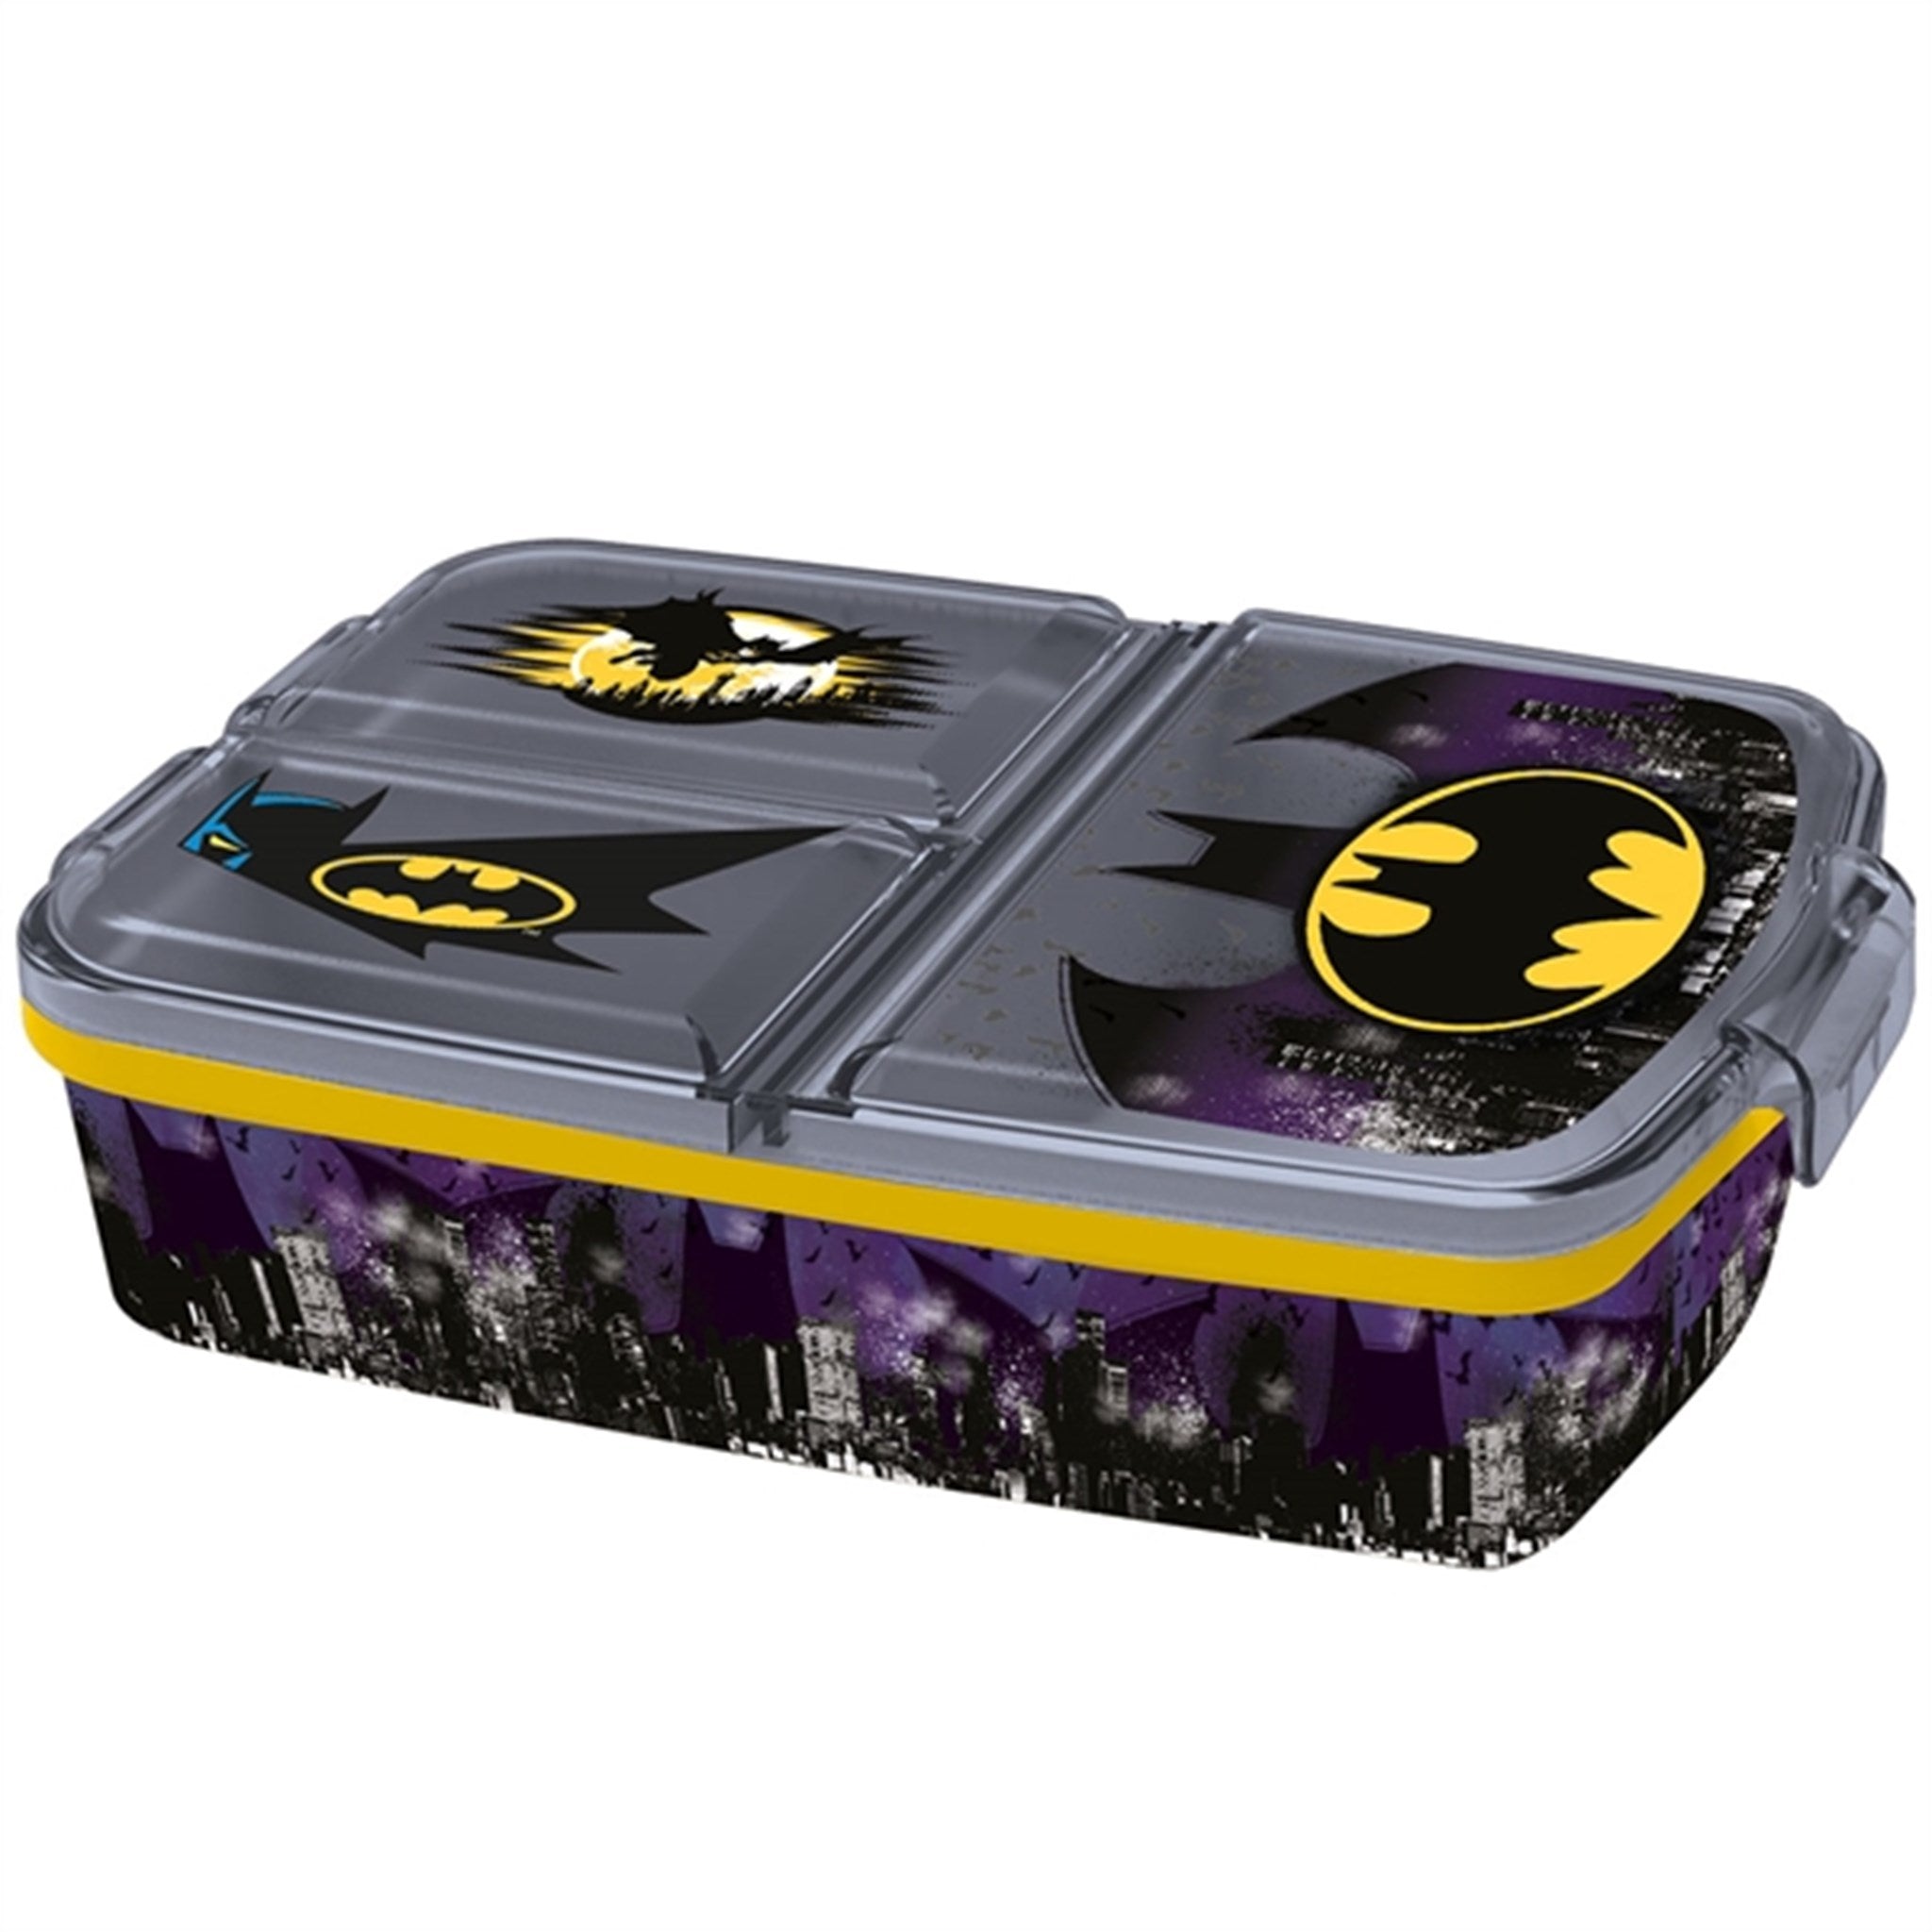 Euromic Batman Lunch Box